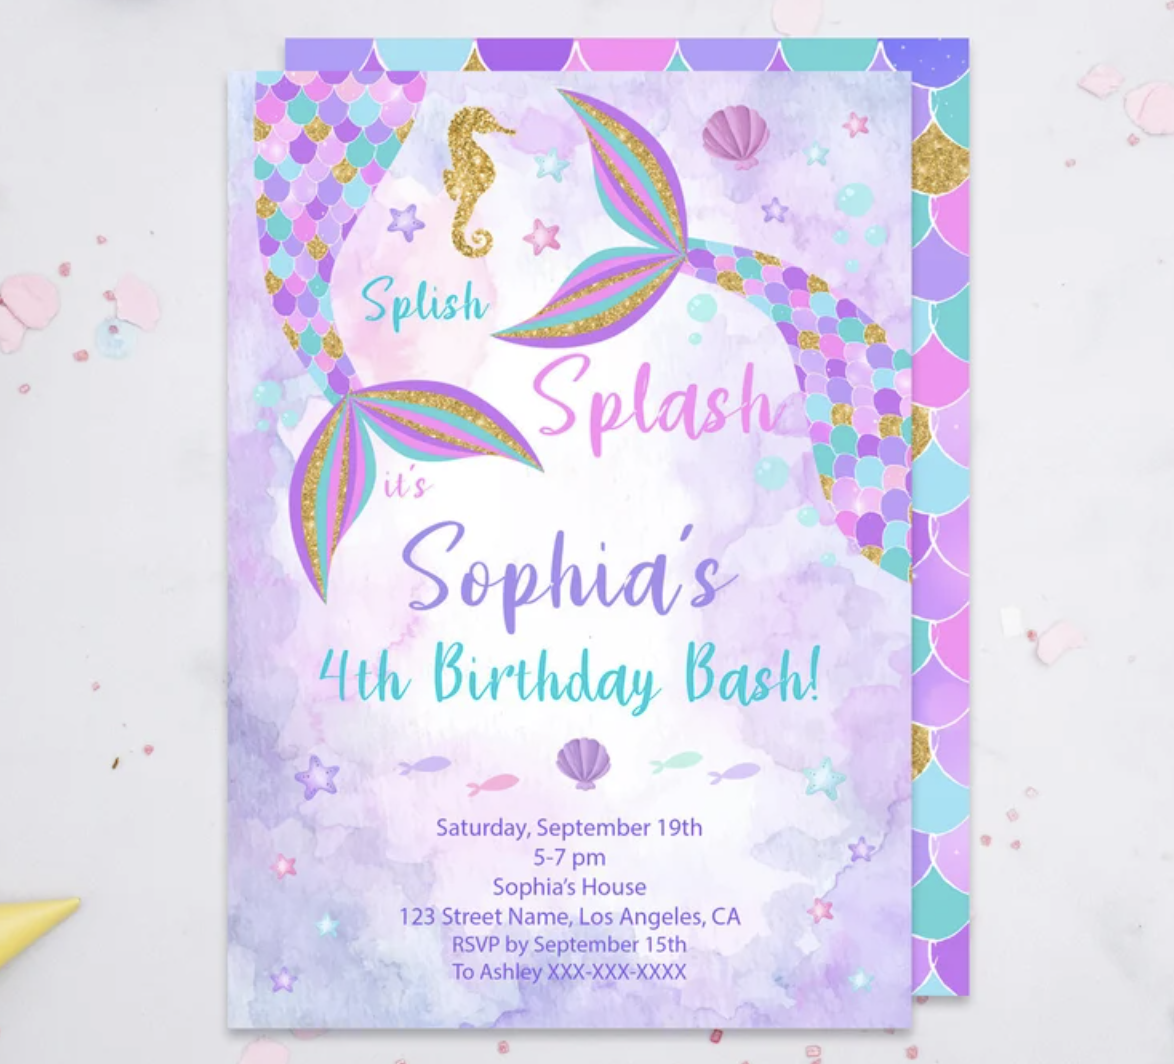 mermaid-birthday-party-invites